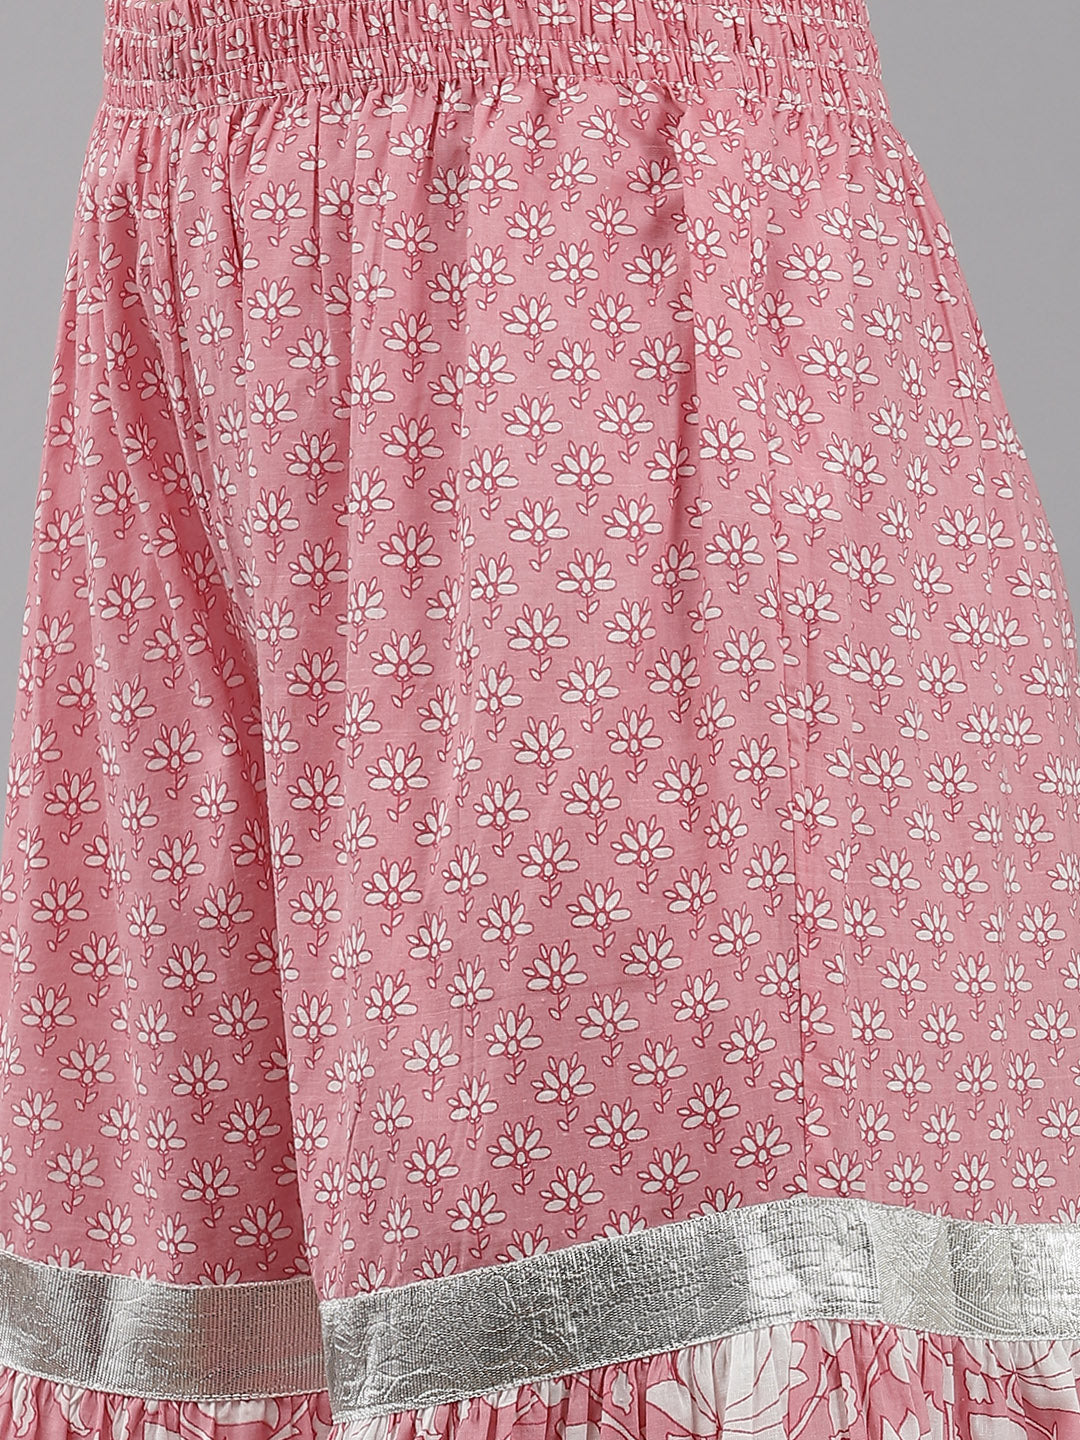 Ishin Women's Cotton Pink Embroidered Anarkali Peplum Kurta Sharara Dupatta Set